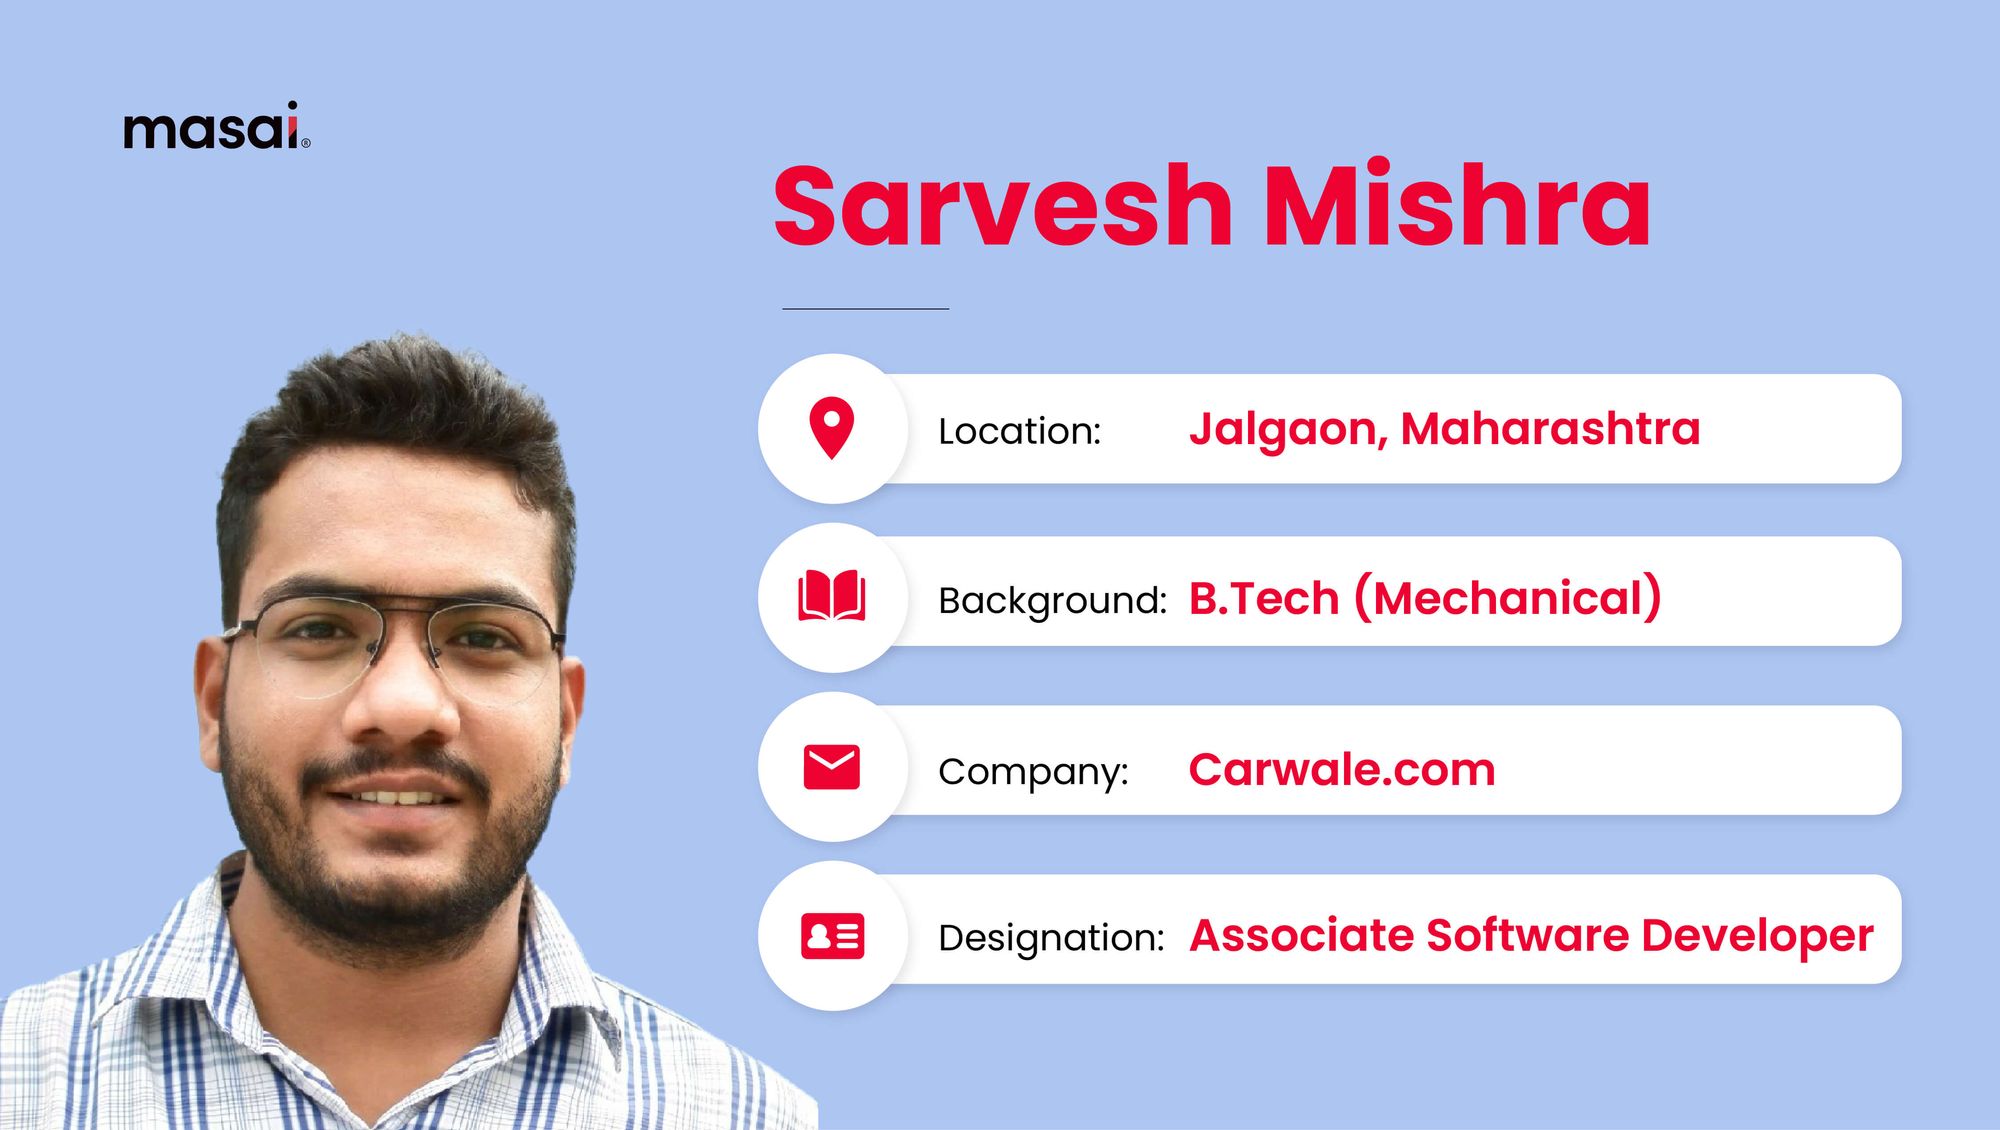 Sarvesh Mishra - A Masai graduate now working as Associate software developer at Carwale.com